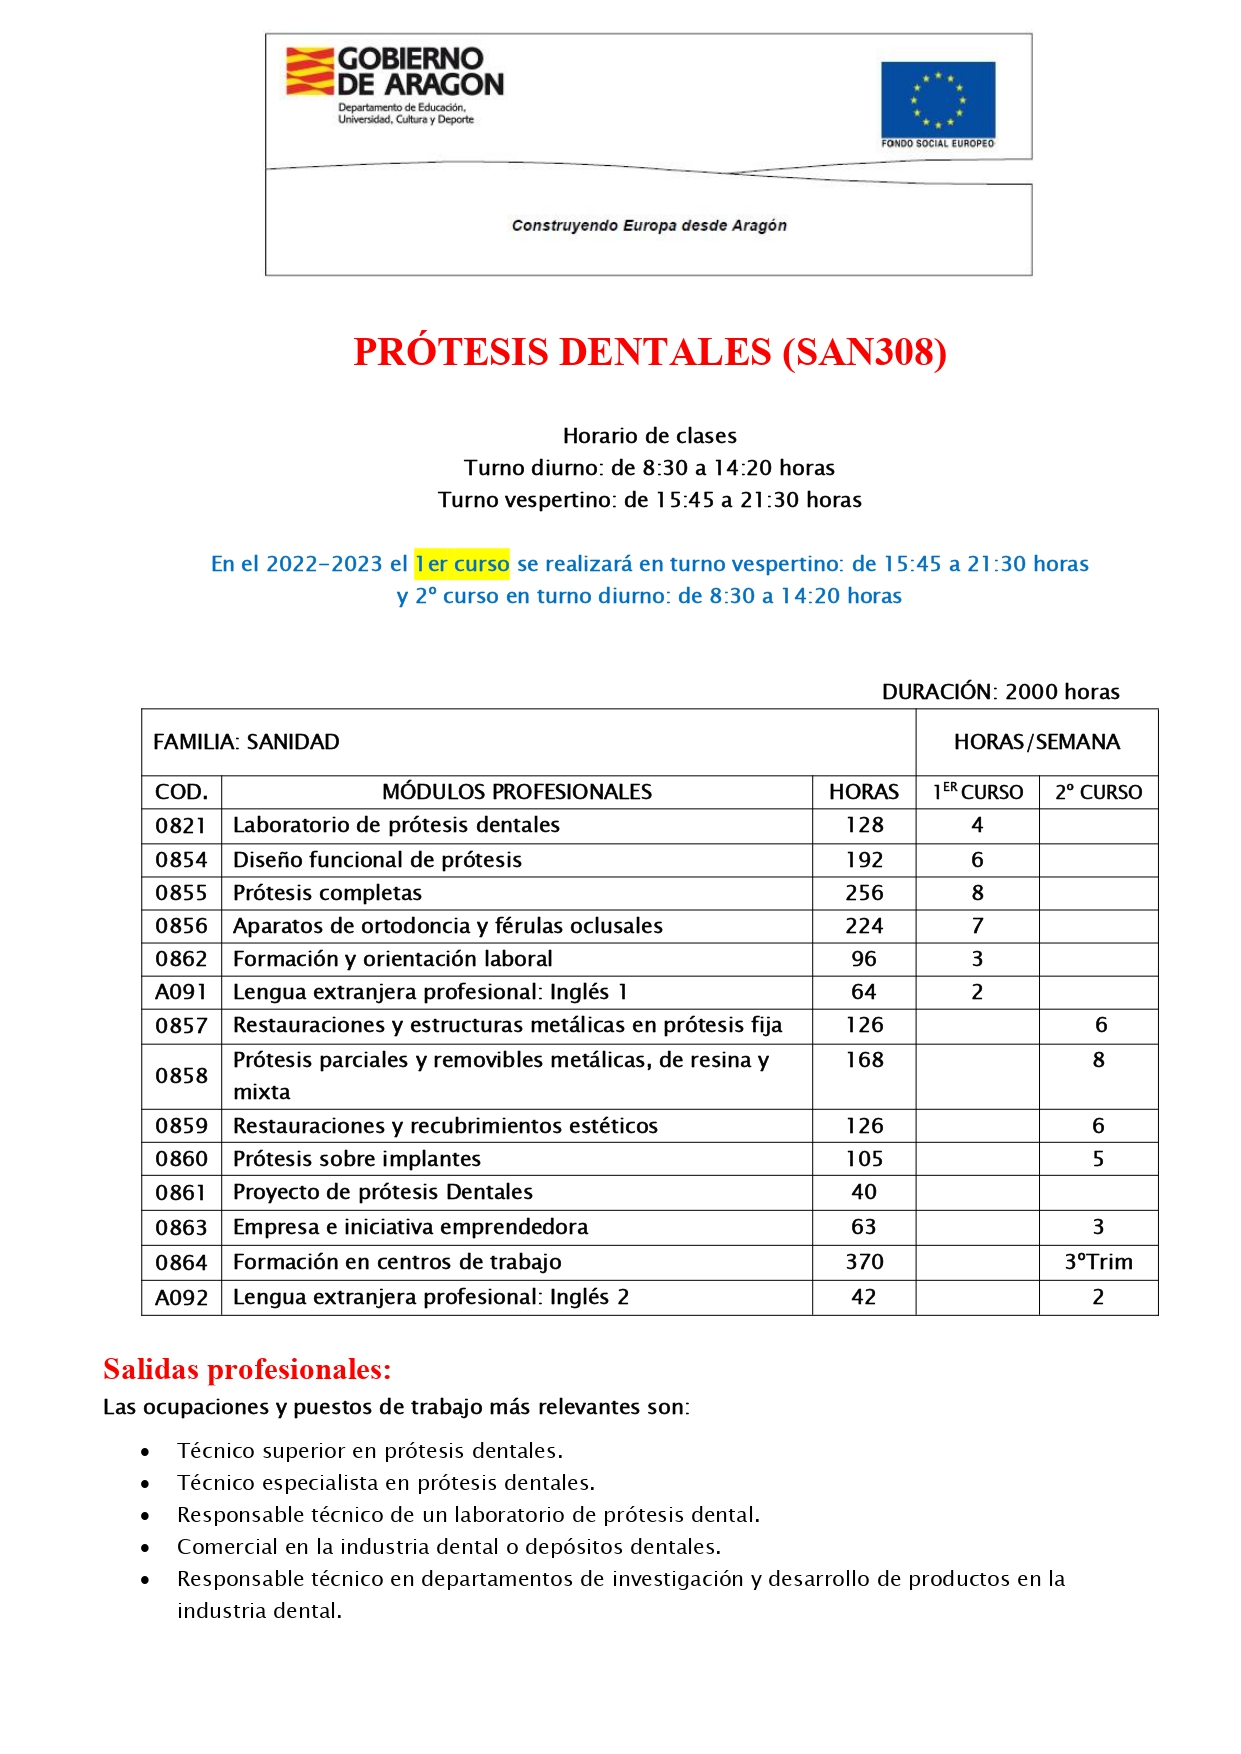 PRÓTESIS DENTALES_SAN308 2022-2023_page-0001